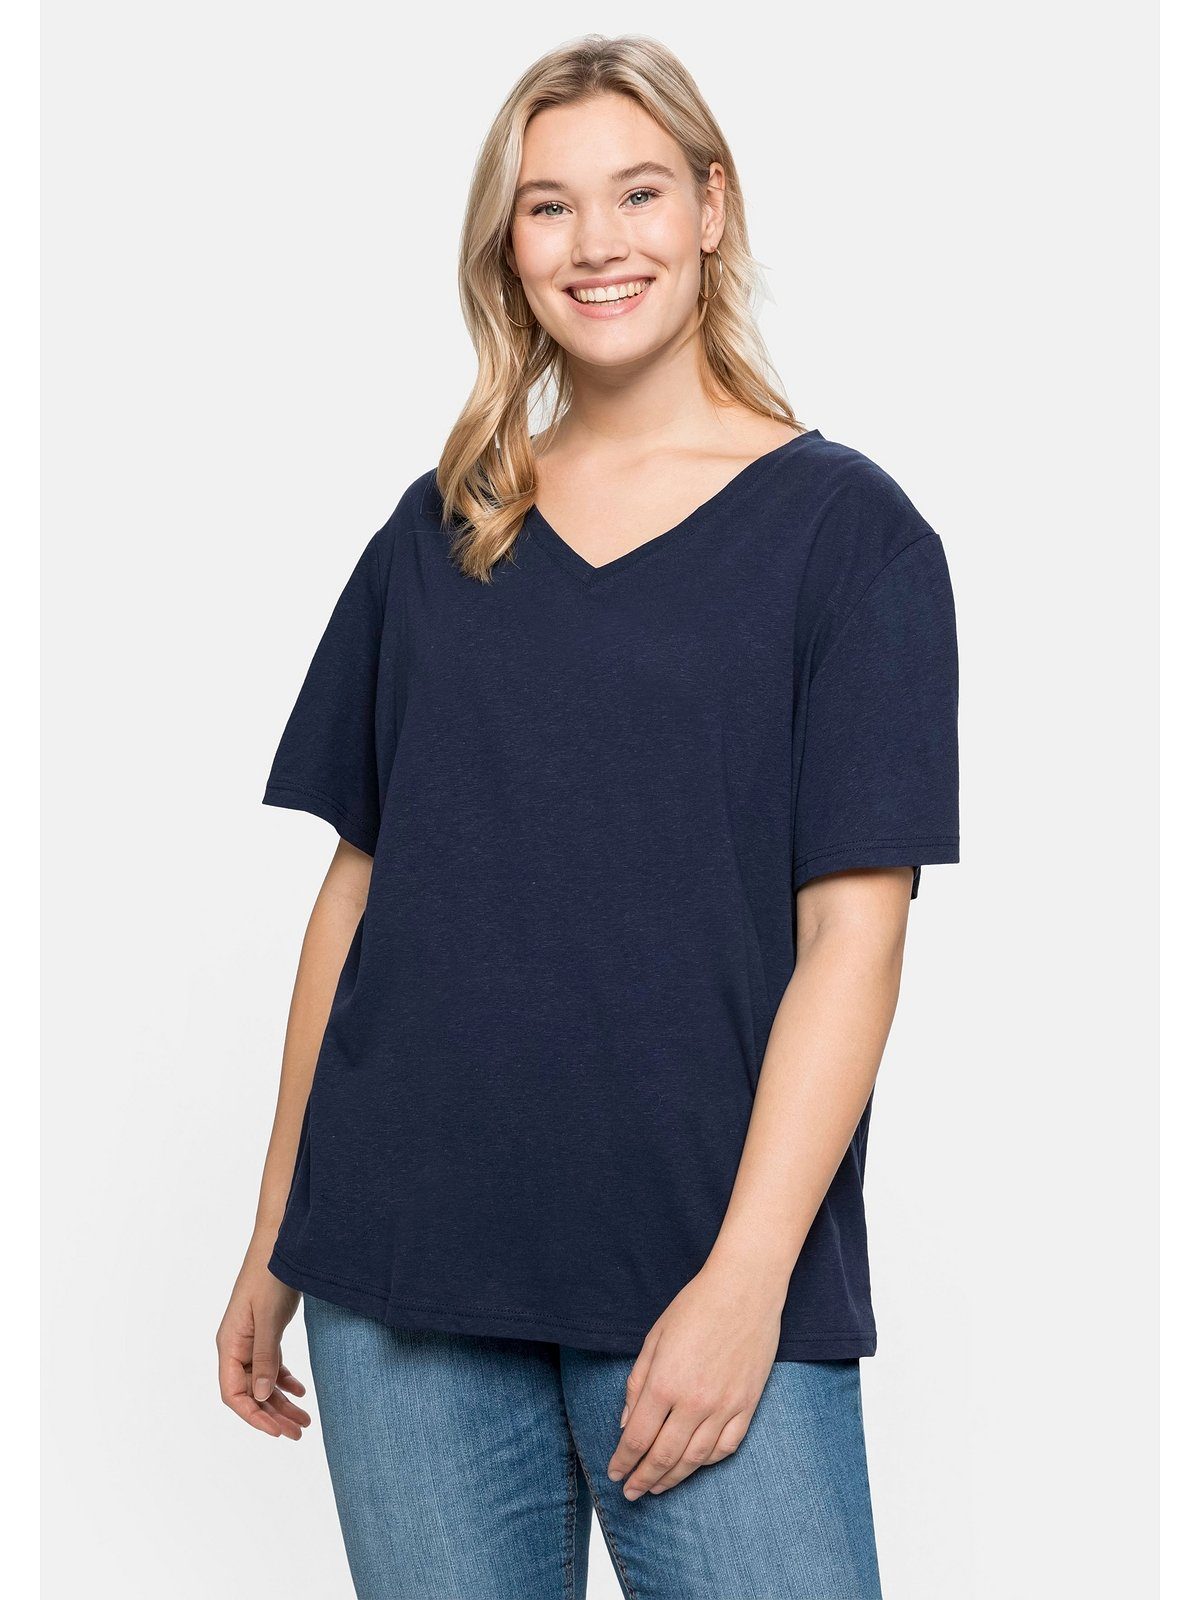 Leinen-Viskose-Mix Große Sheego edlem Größen T-Shirt marine aus